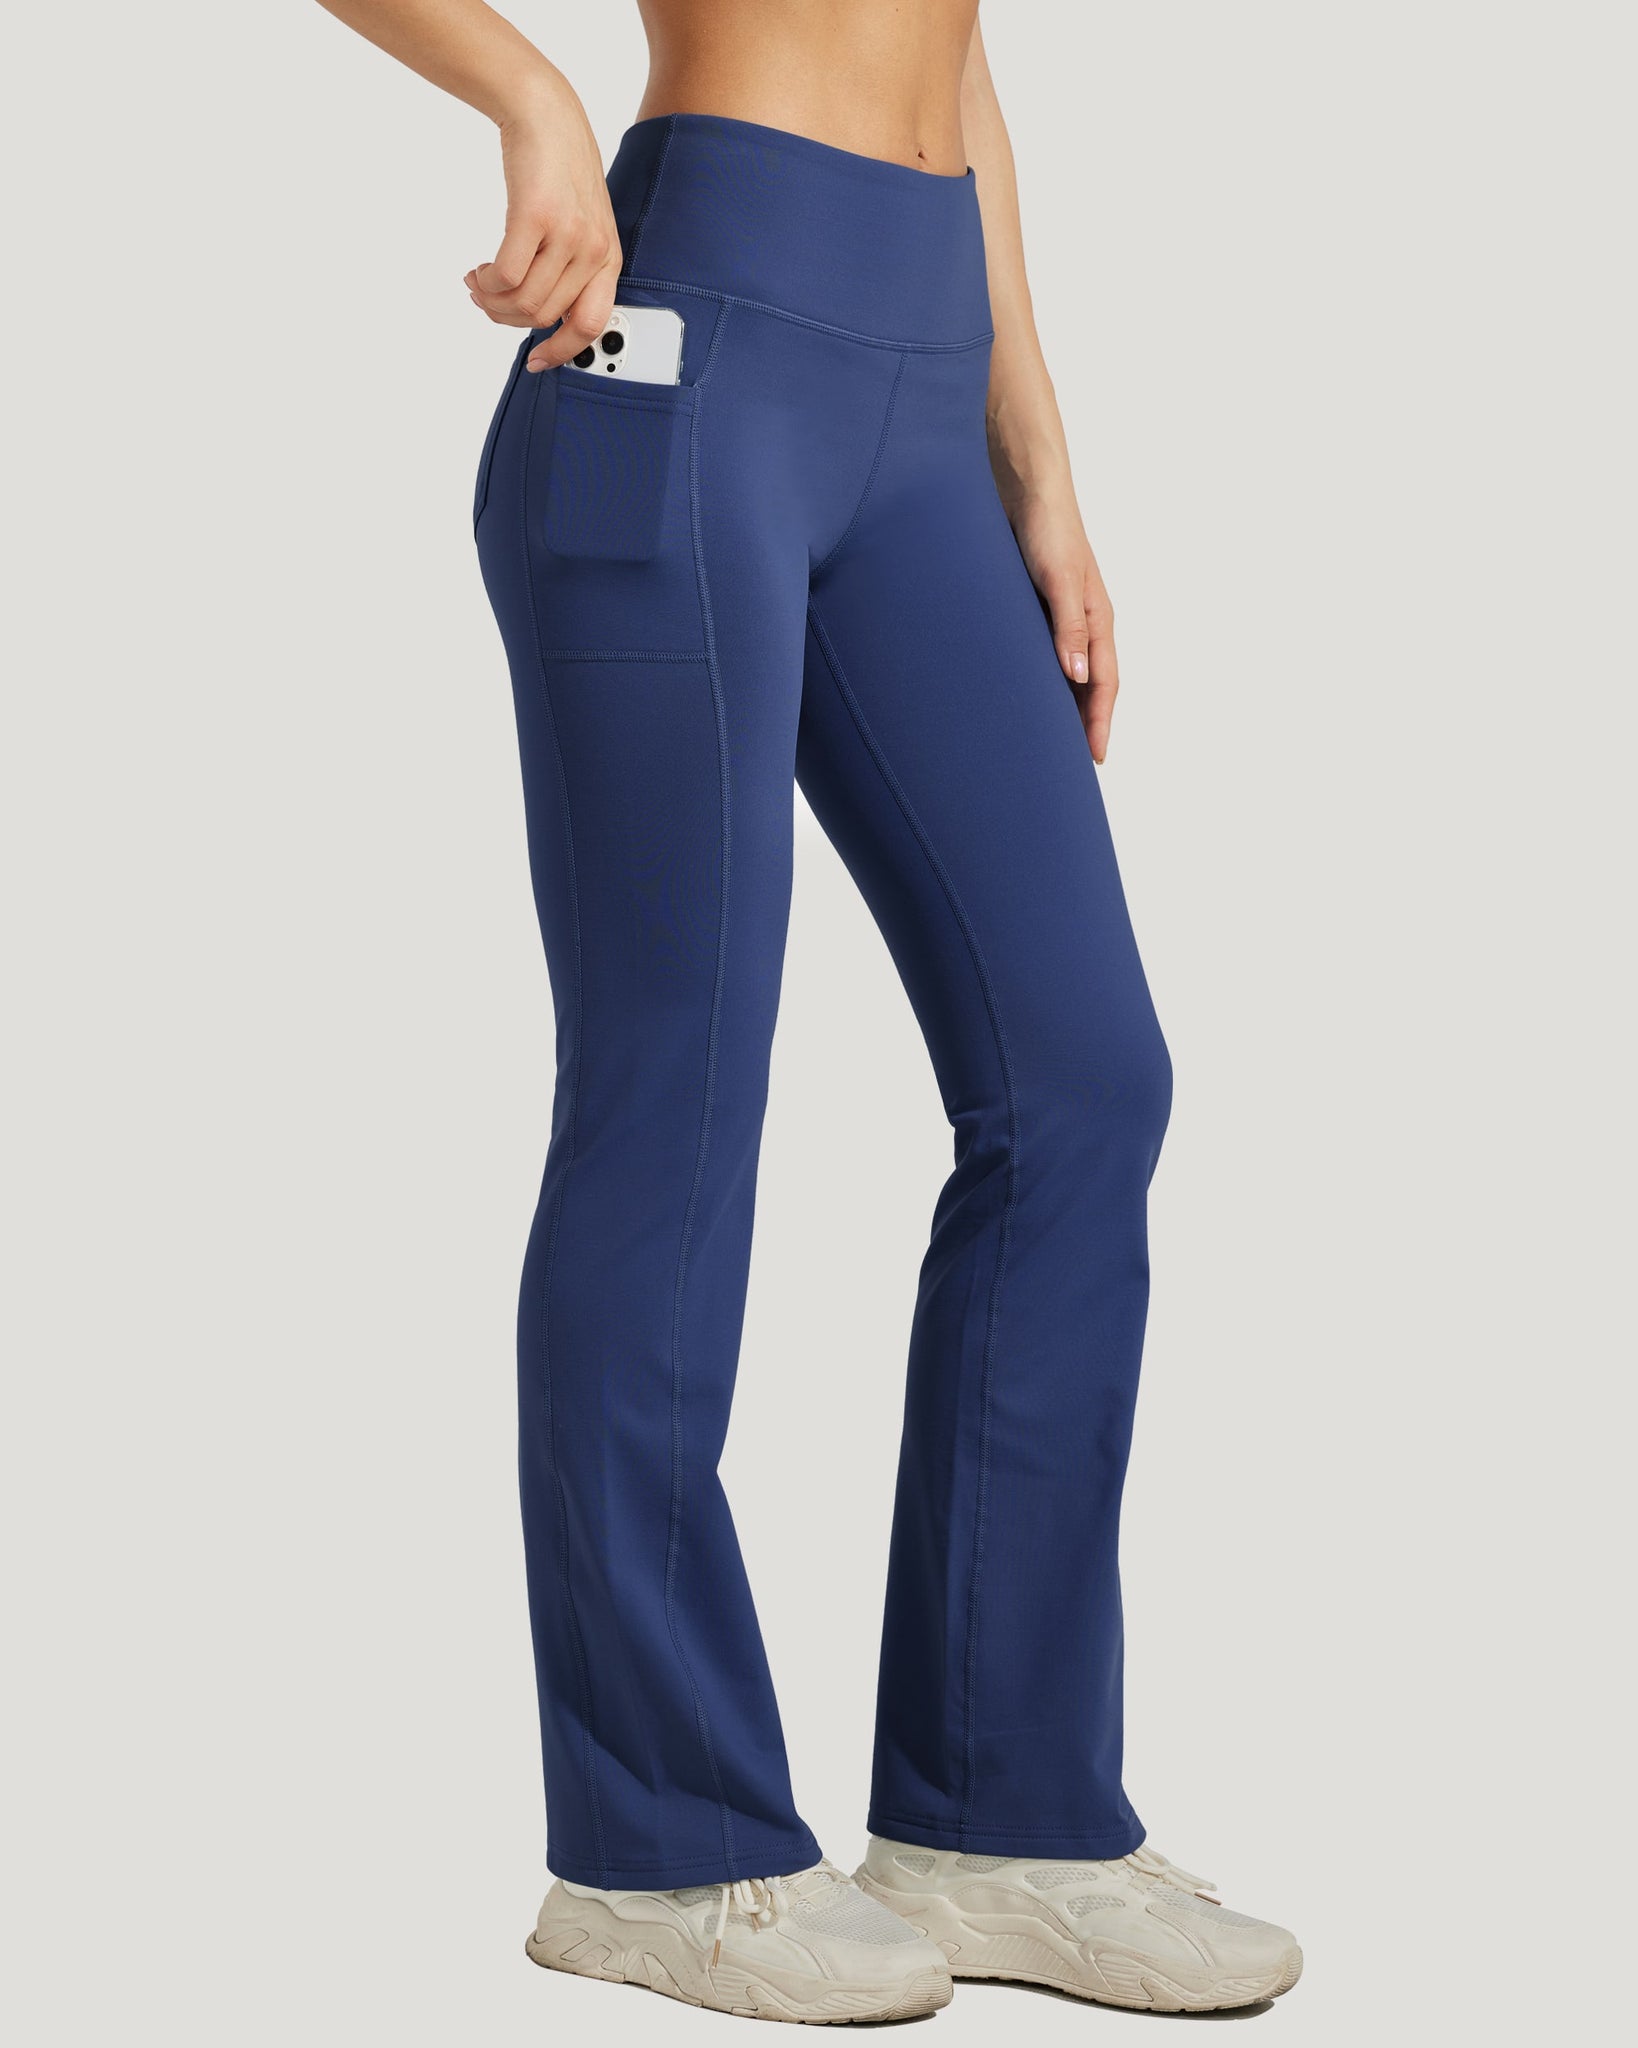 Women's Fleece Lined Bootcut Yoga Pants_Navy_model3